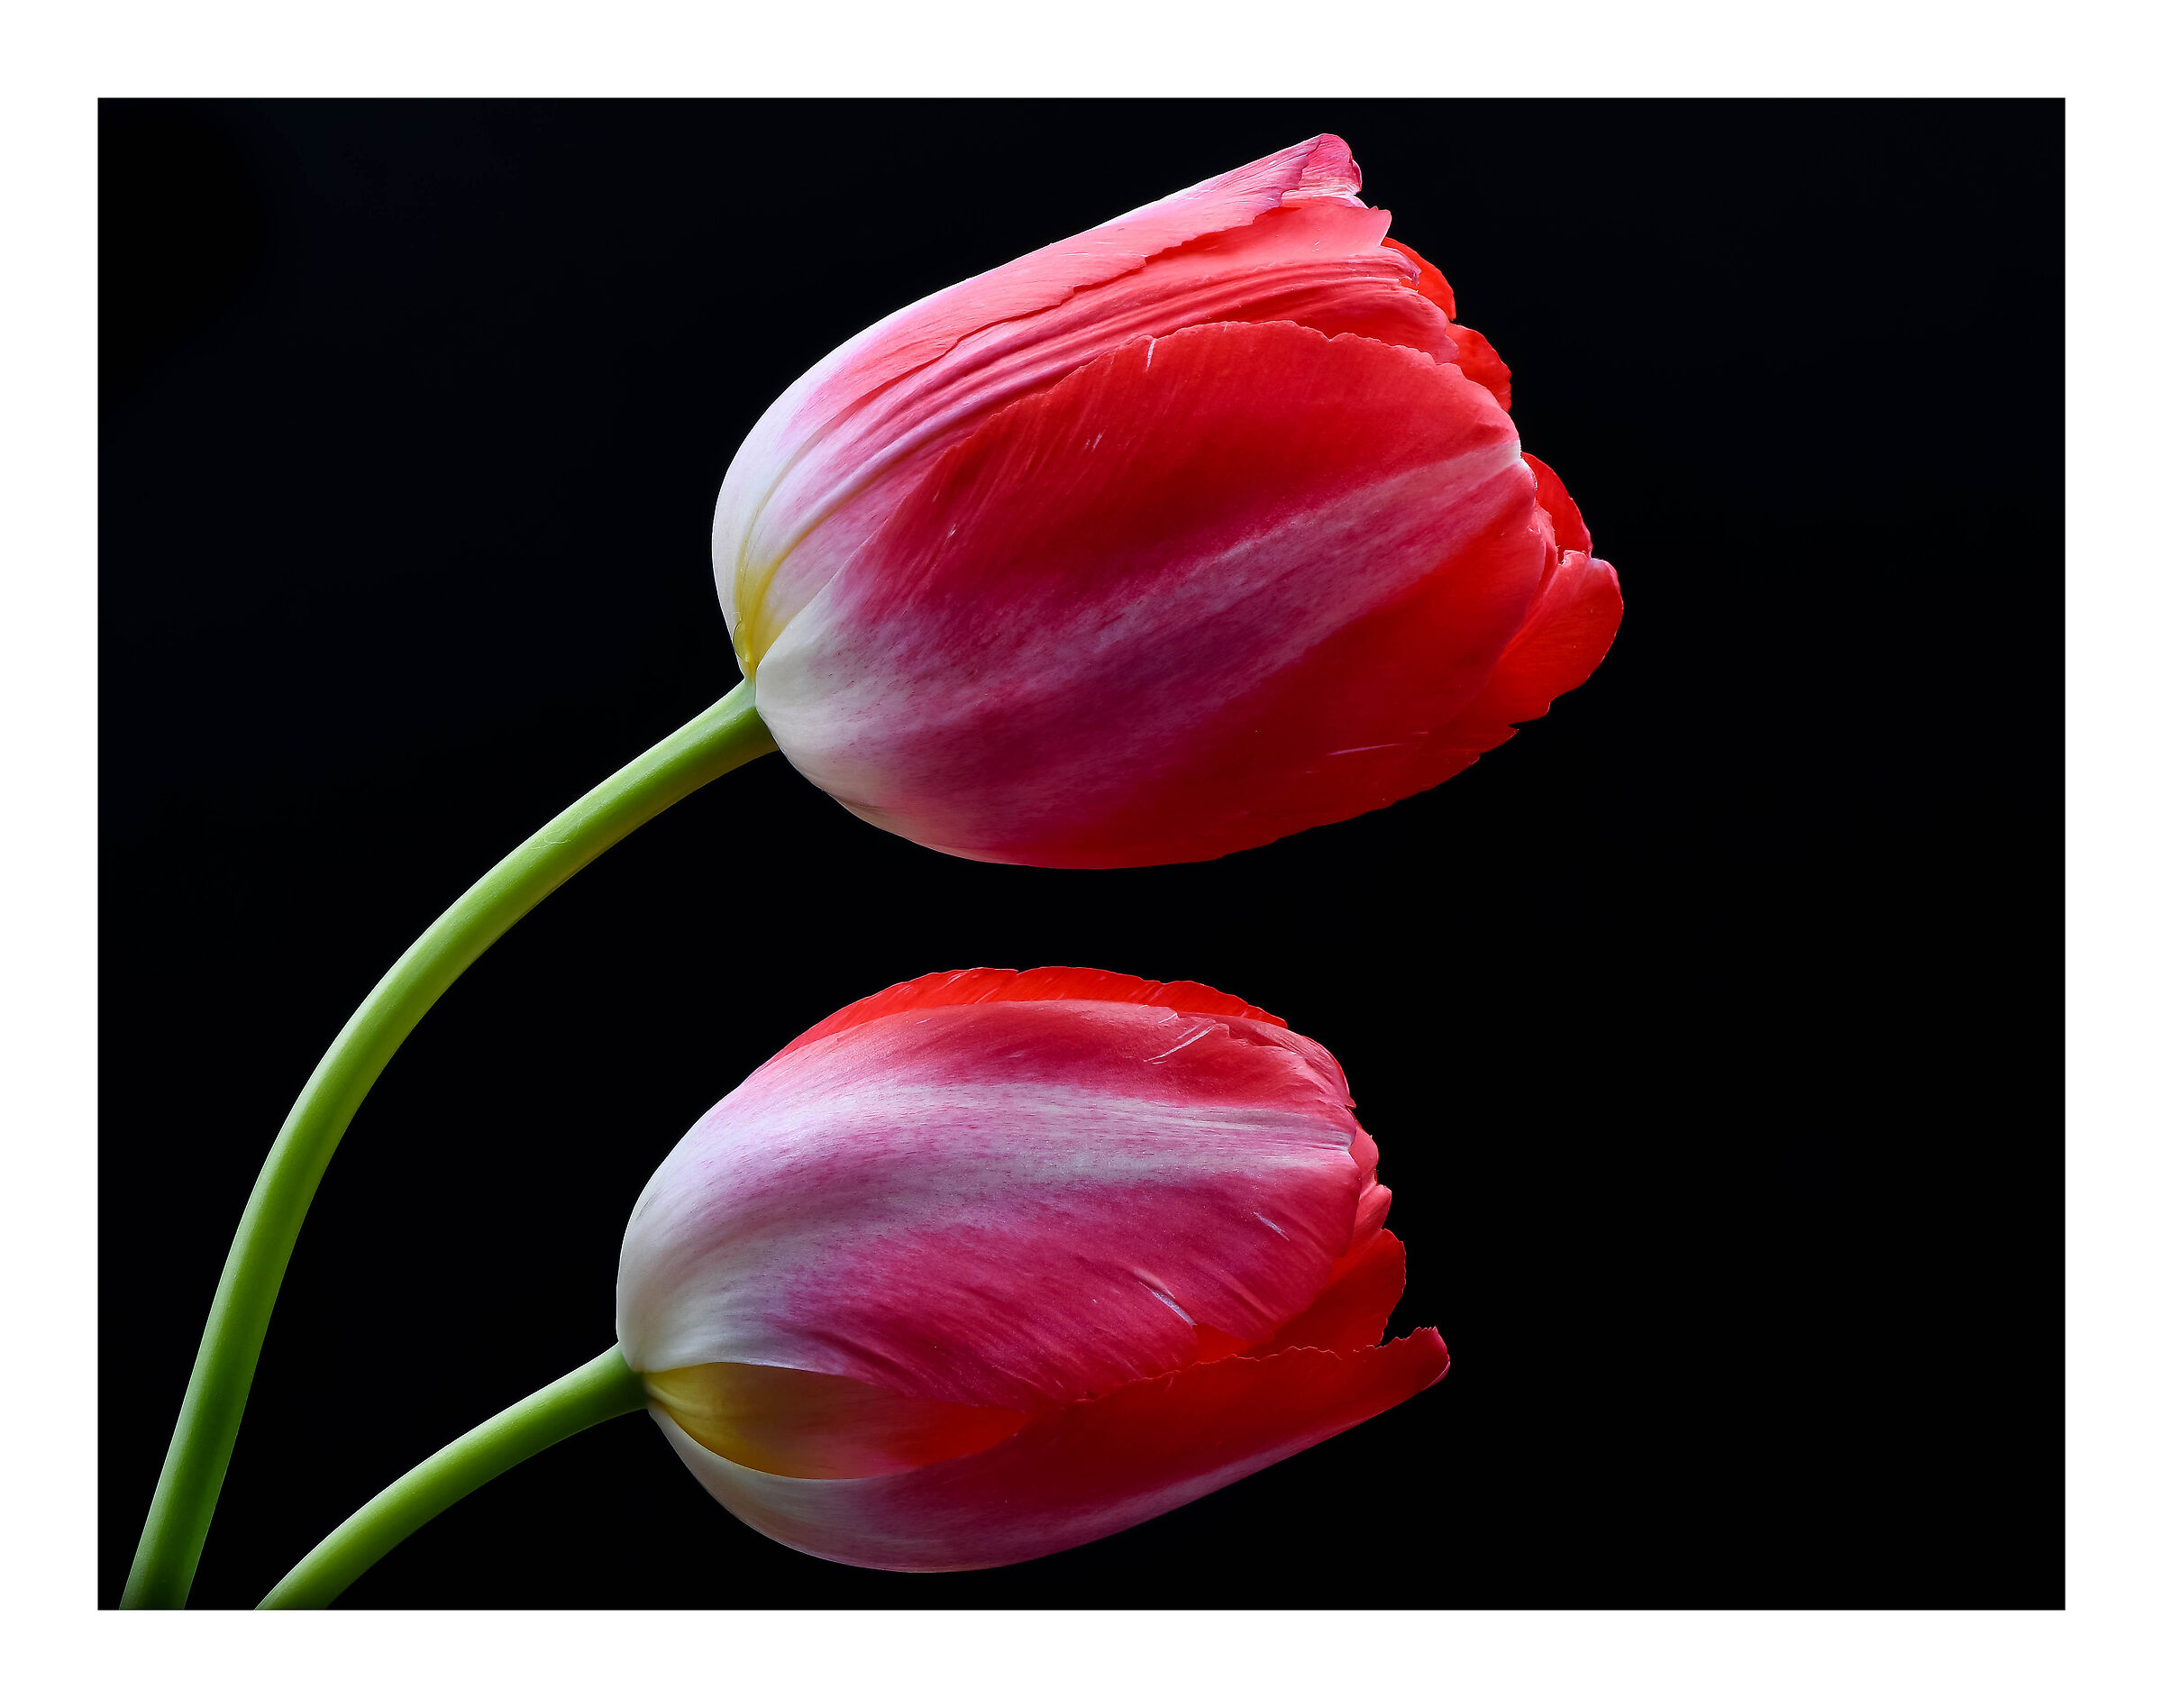 Evening tulips....